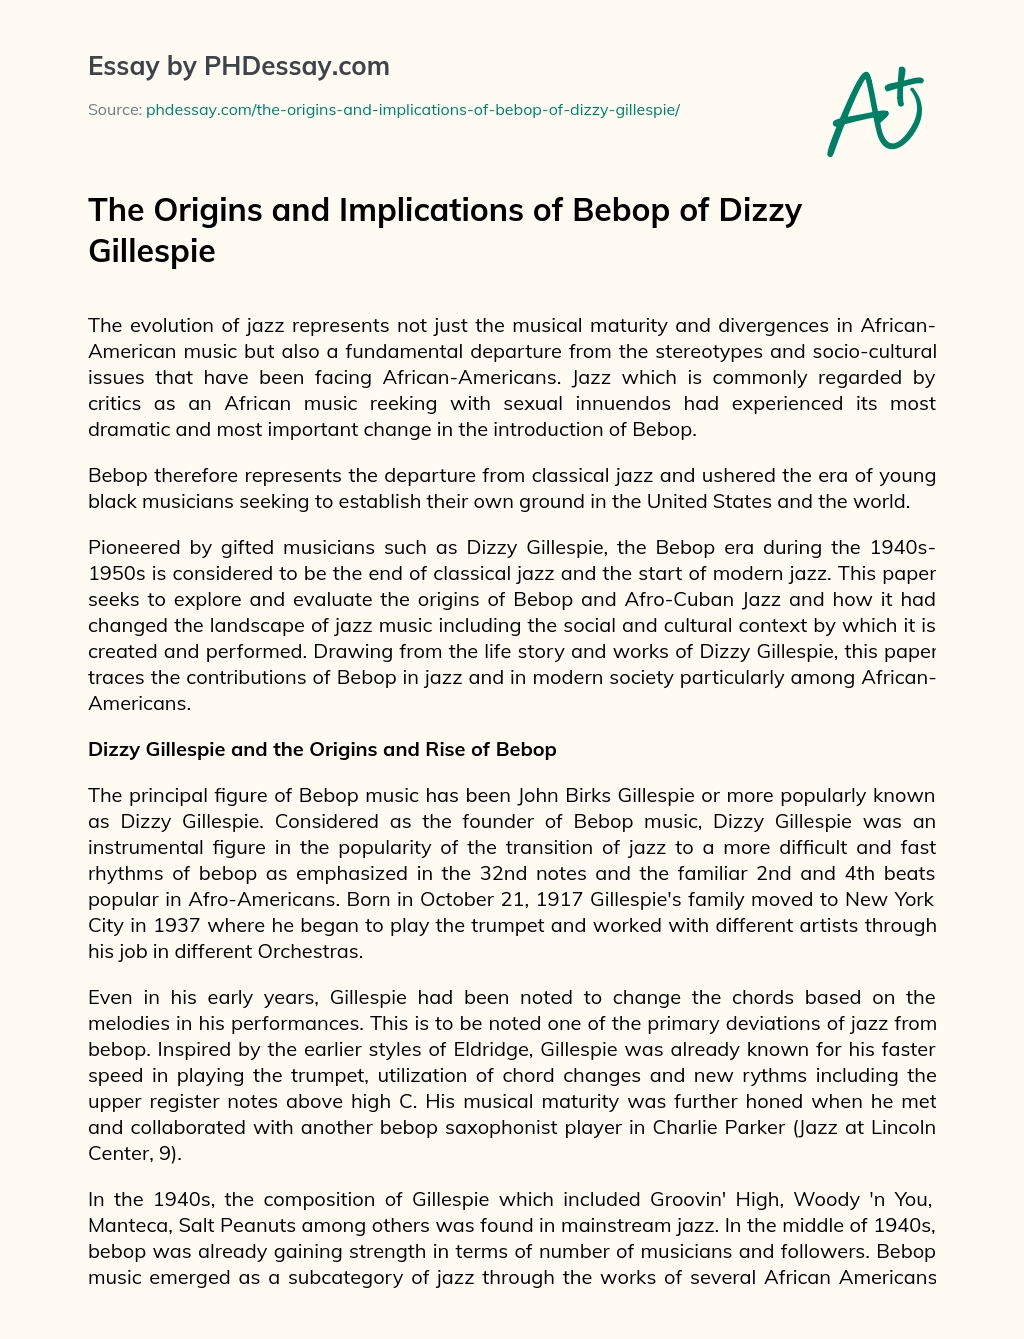 The Origins and Implications of Bebop of Dizzy Gillespie essay